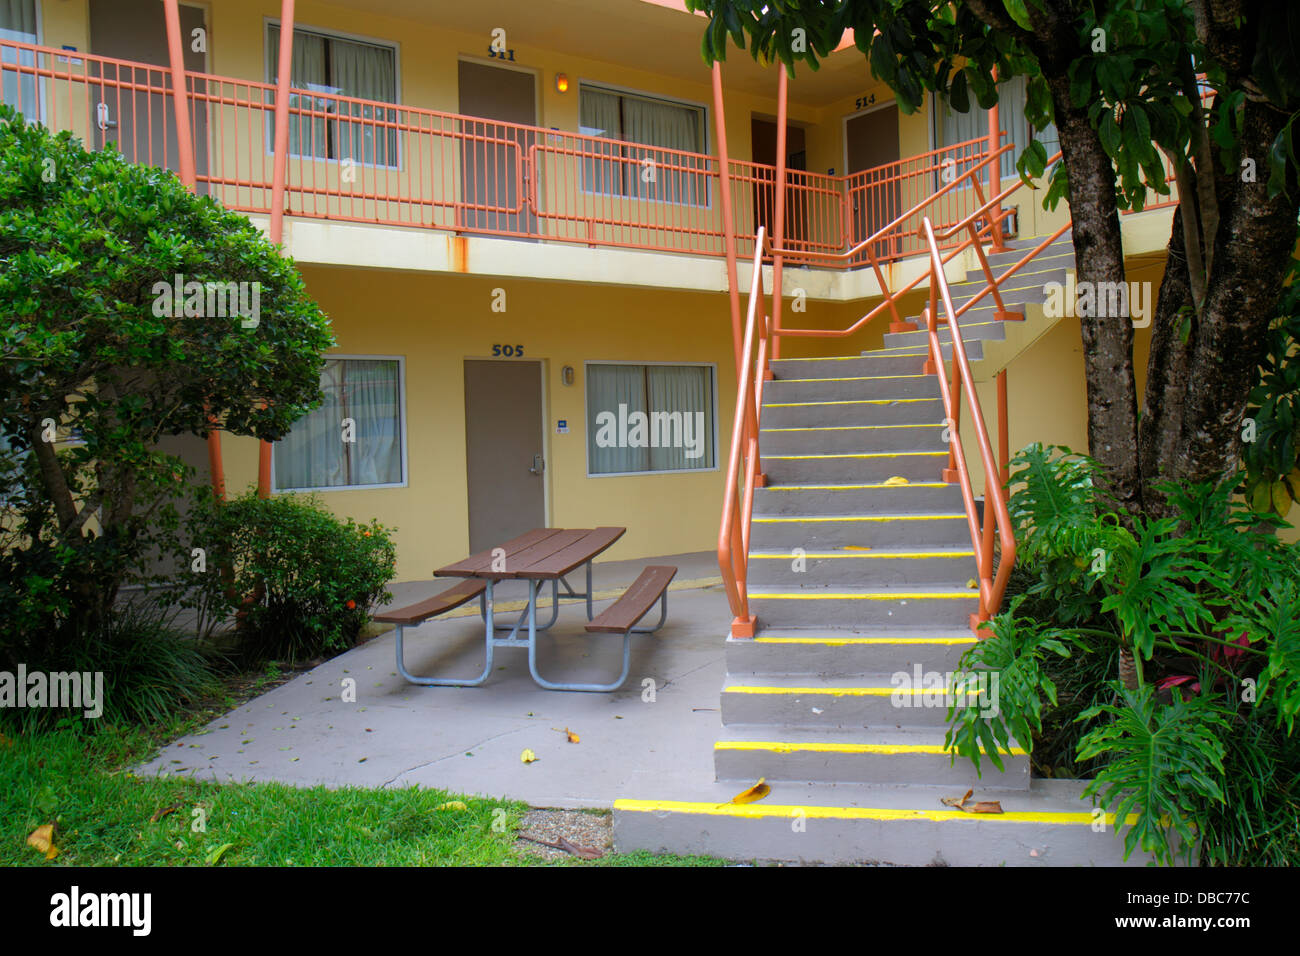 Fort ft. Lauderdale Florida,Days Inn Bahia Cabana,motel,hôtel,chambres,portes,budget,marches escalier,FL130720041 Banque D'Images